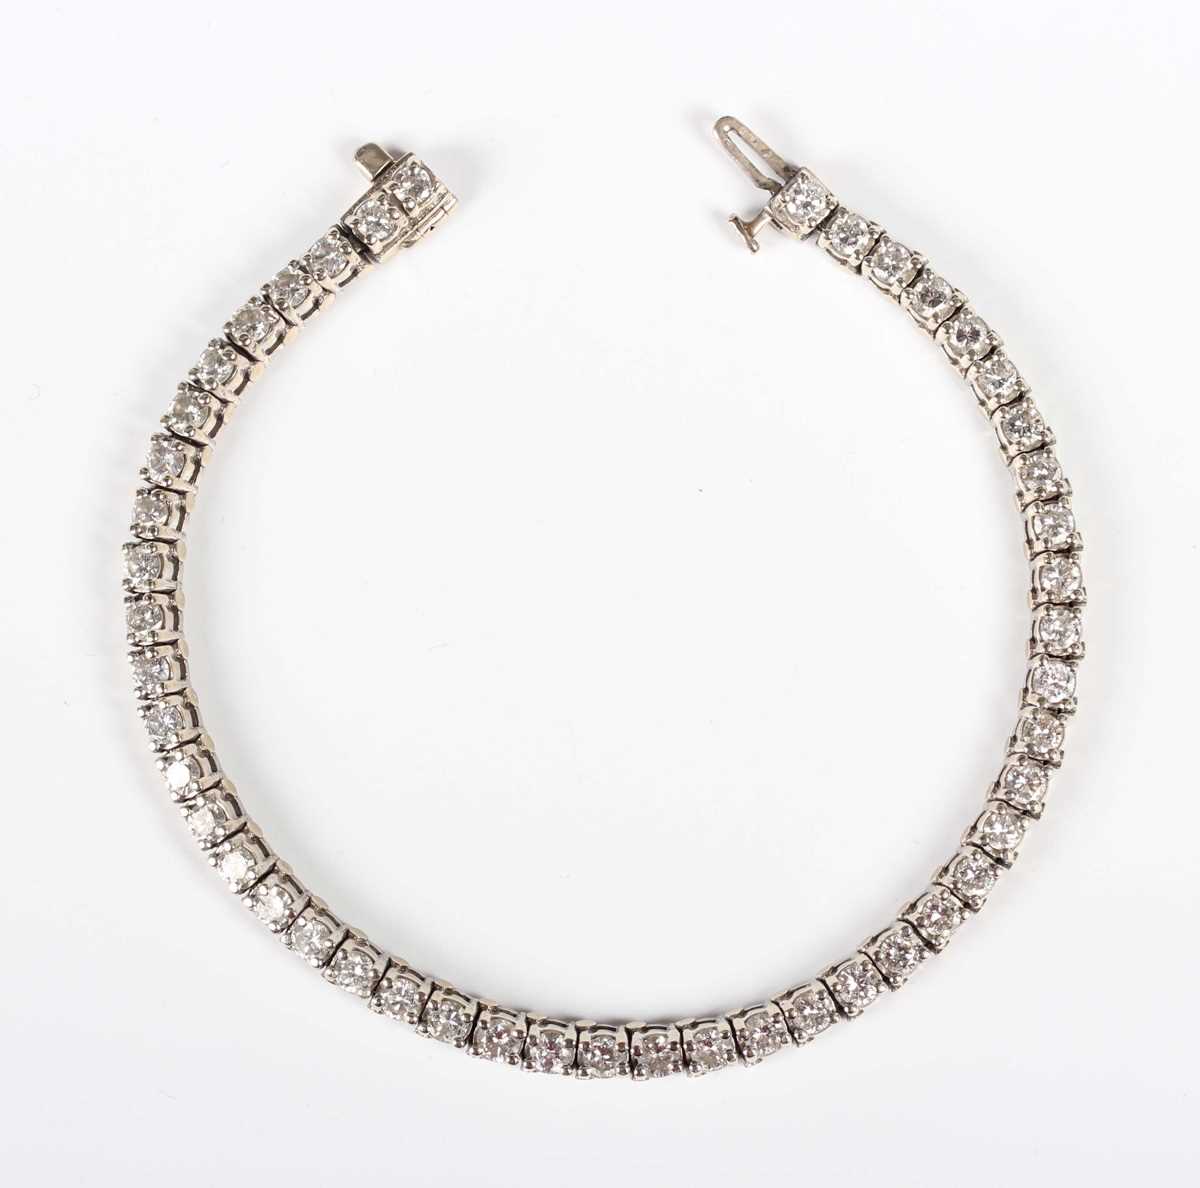 A diamond line bracelet, claw set with a row of circular cut diamonds, on a snap clasp with a